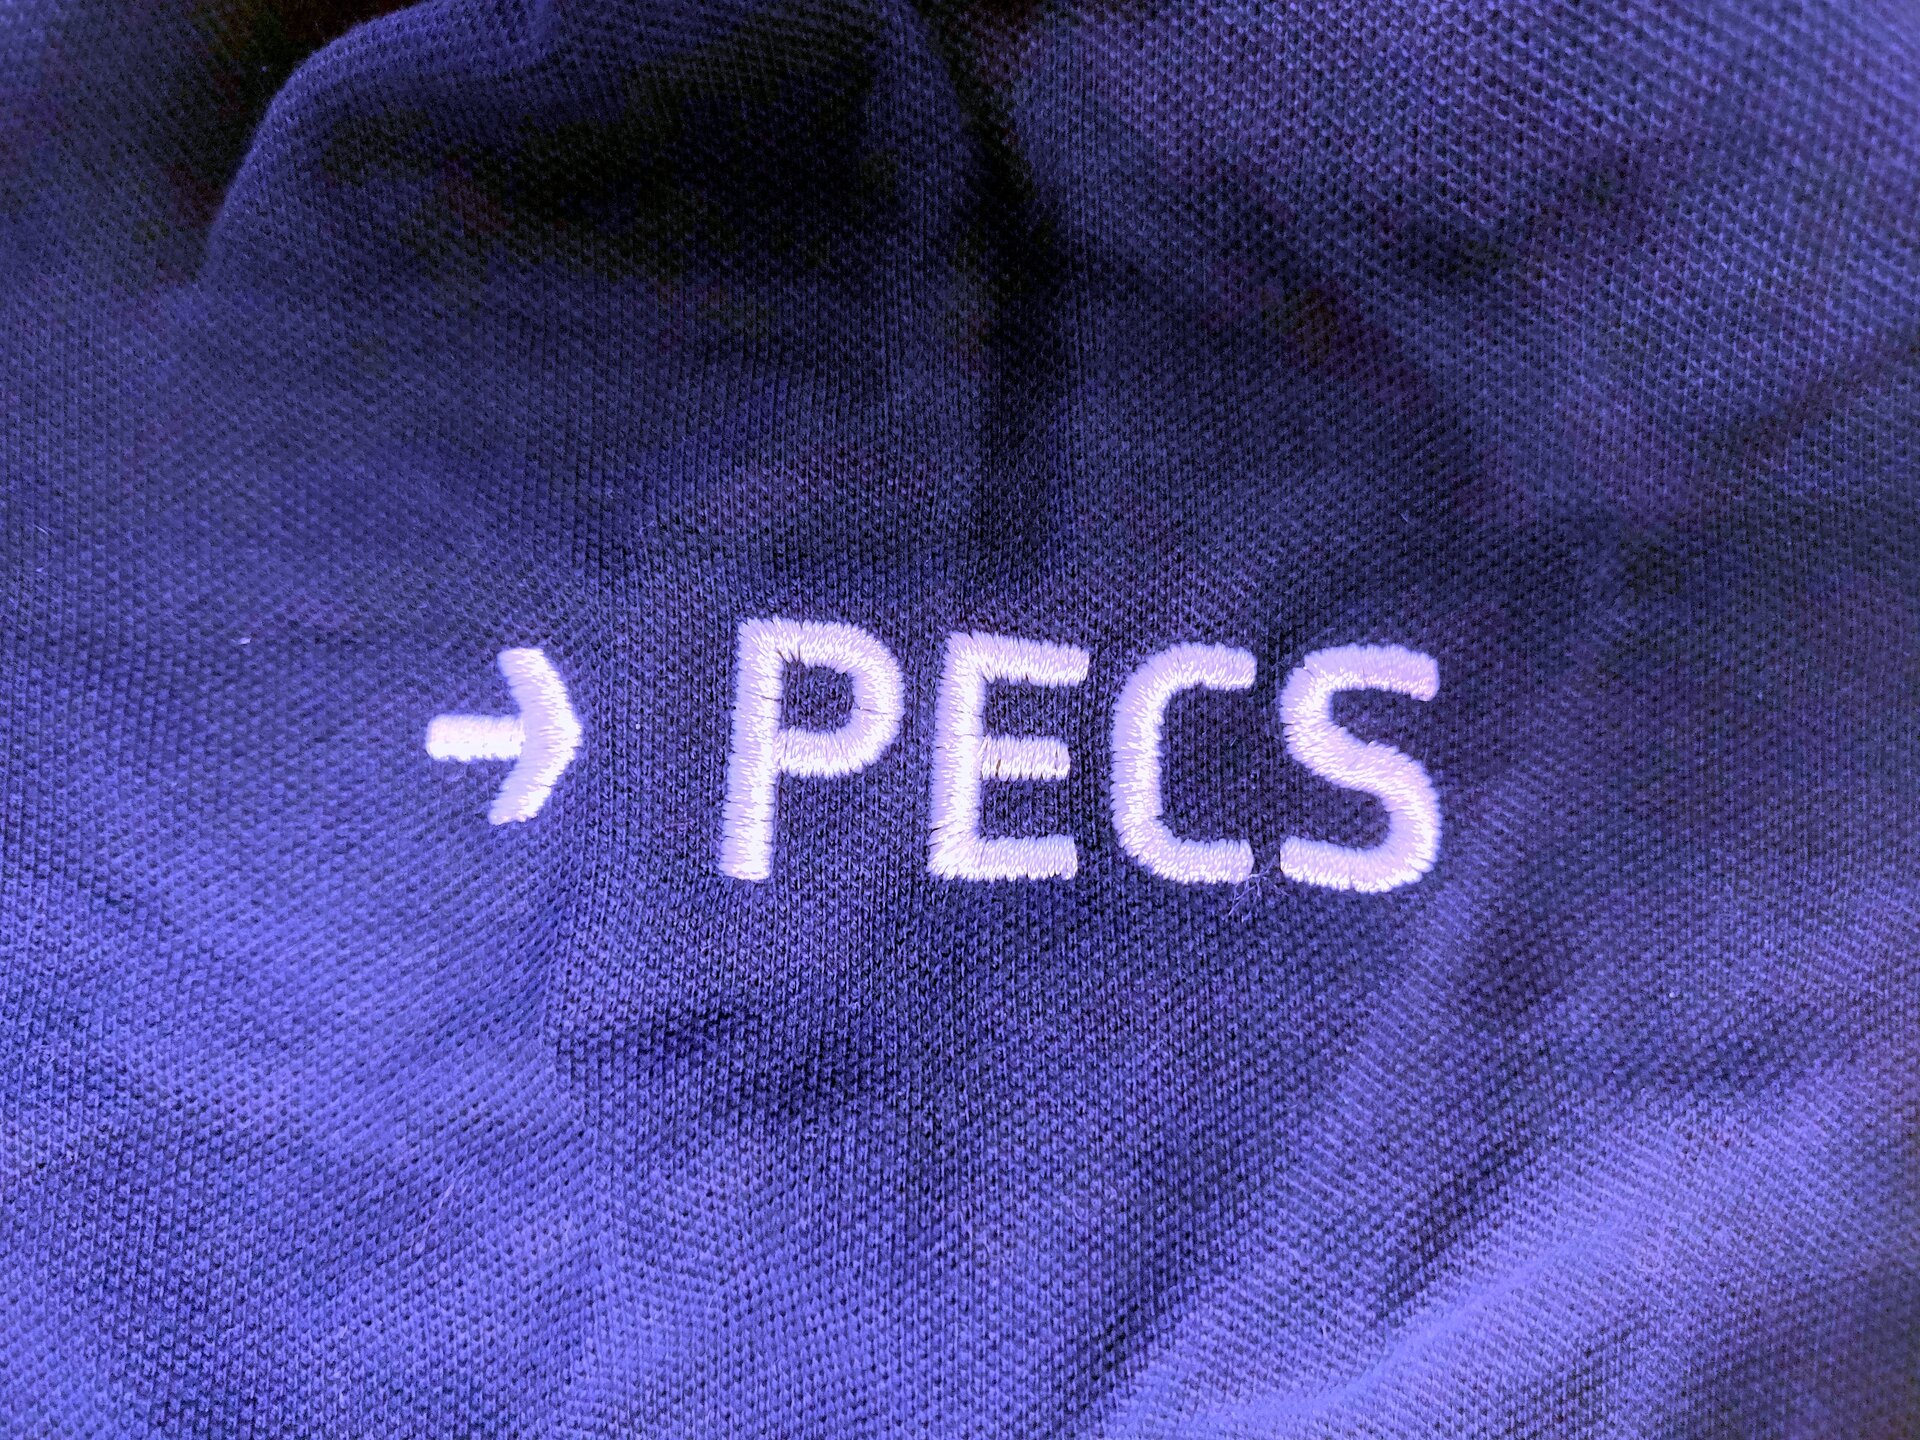 PECS logo